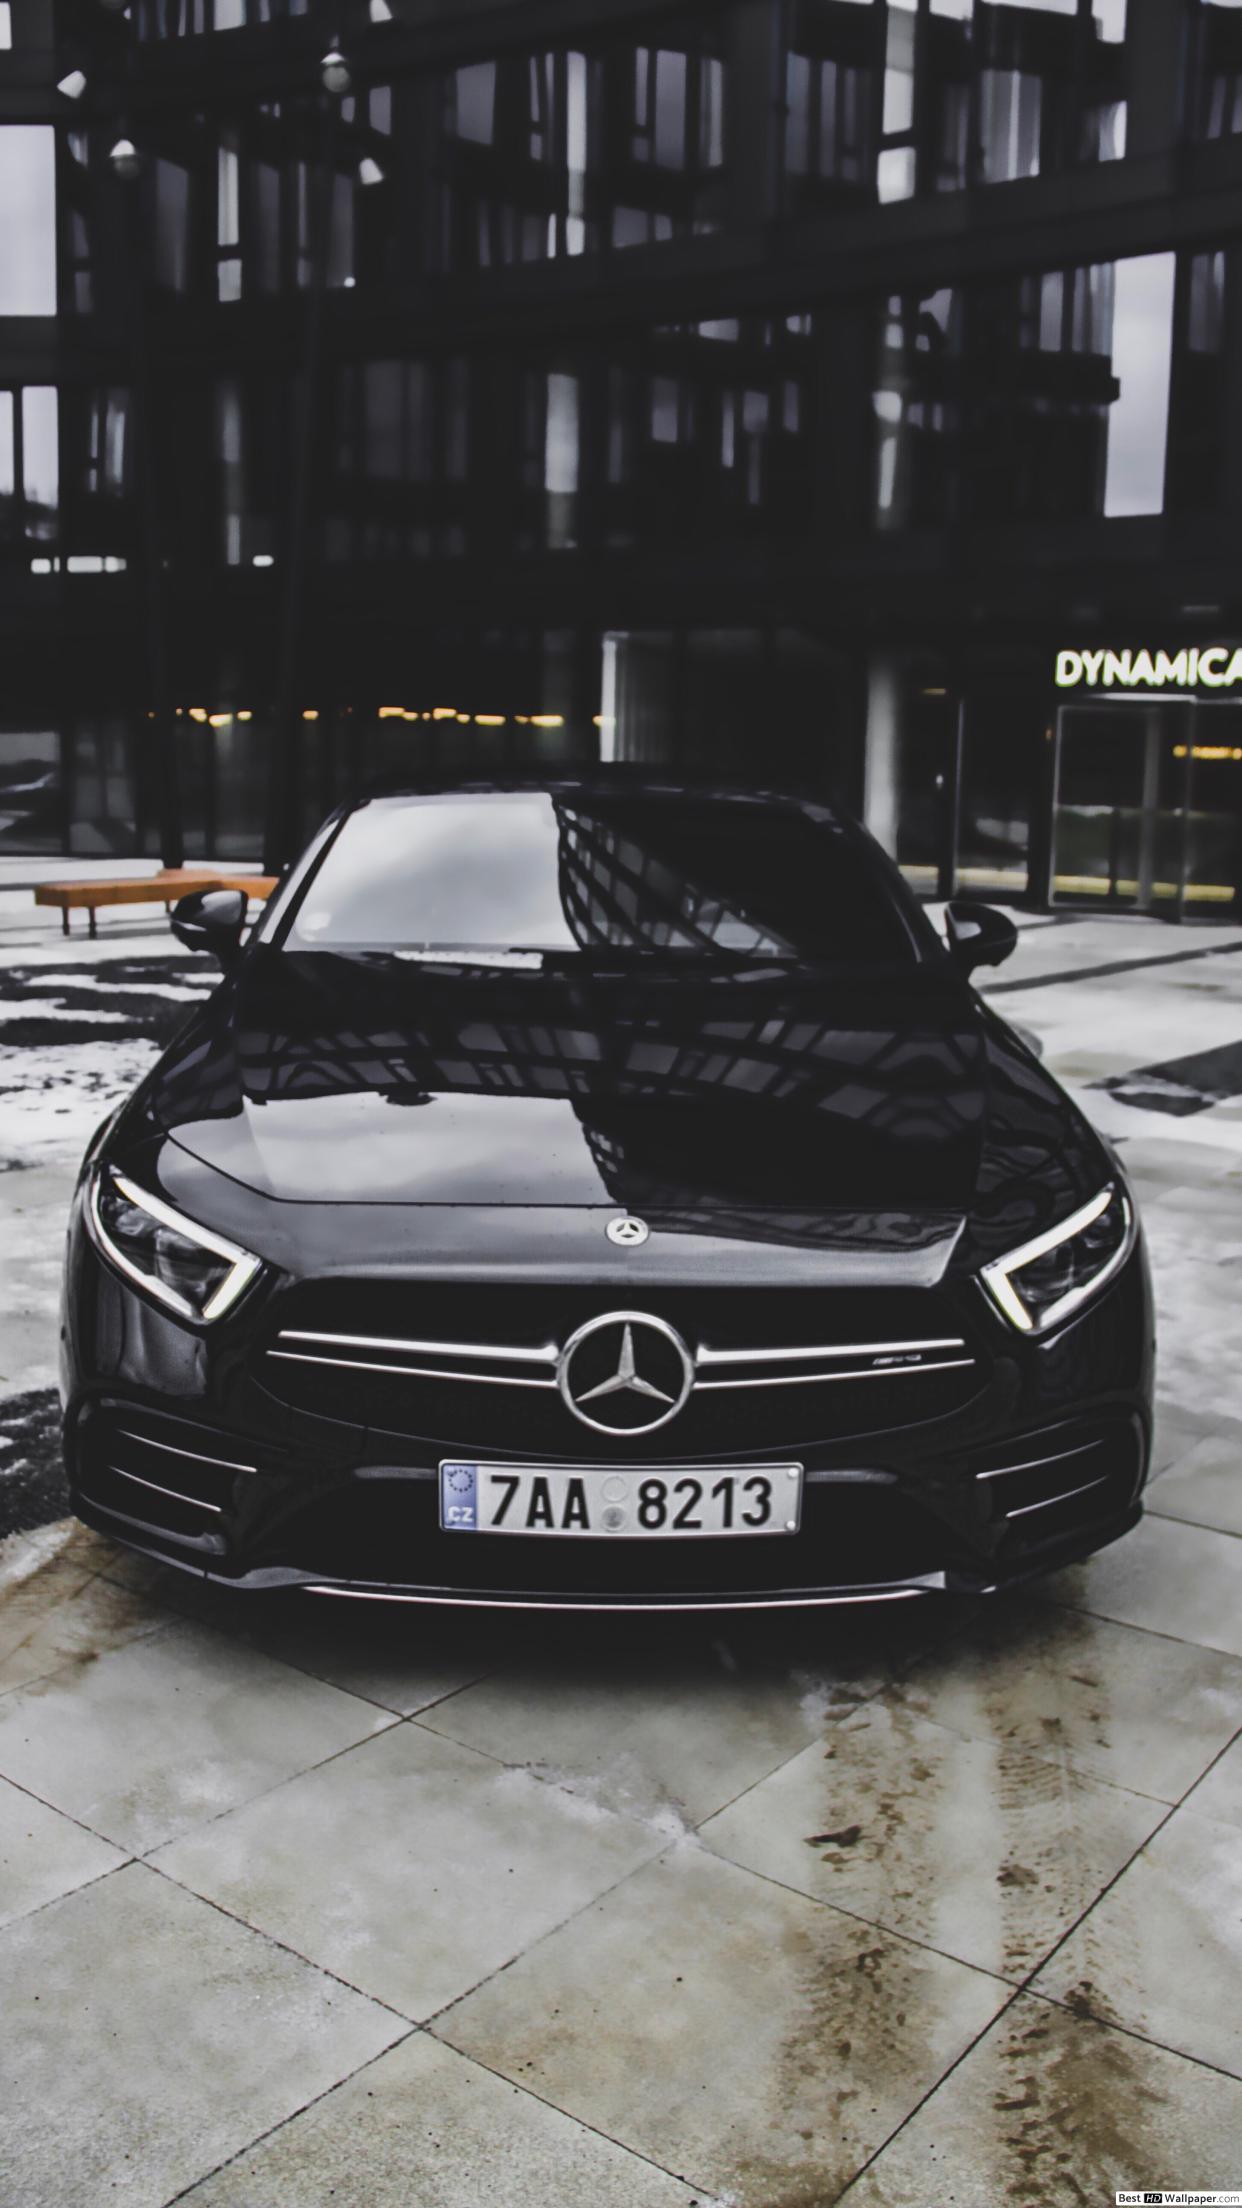 Black Mercedes Benz Car Parked Outside Dynamics Building HD